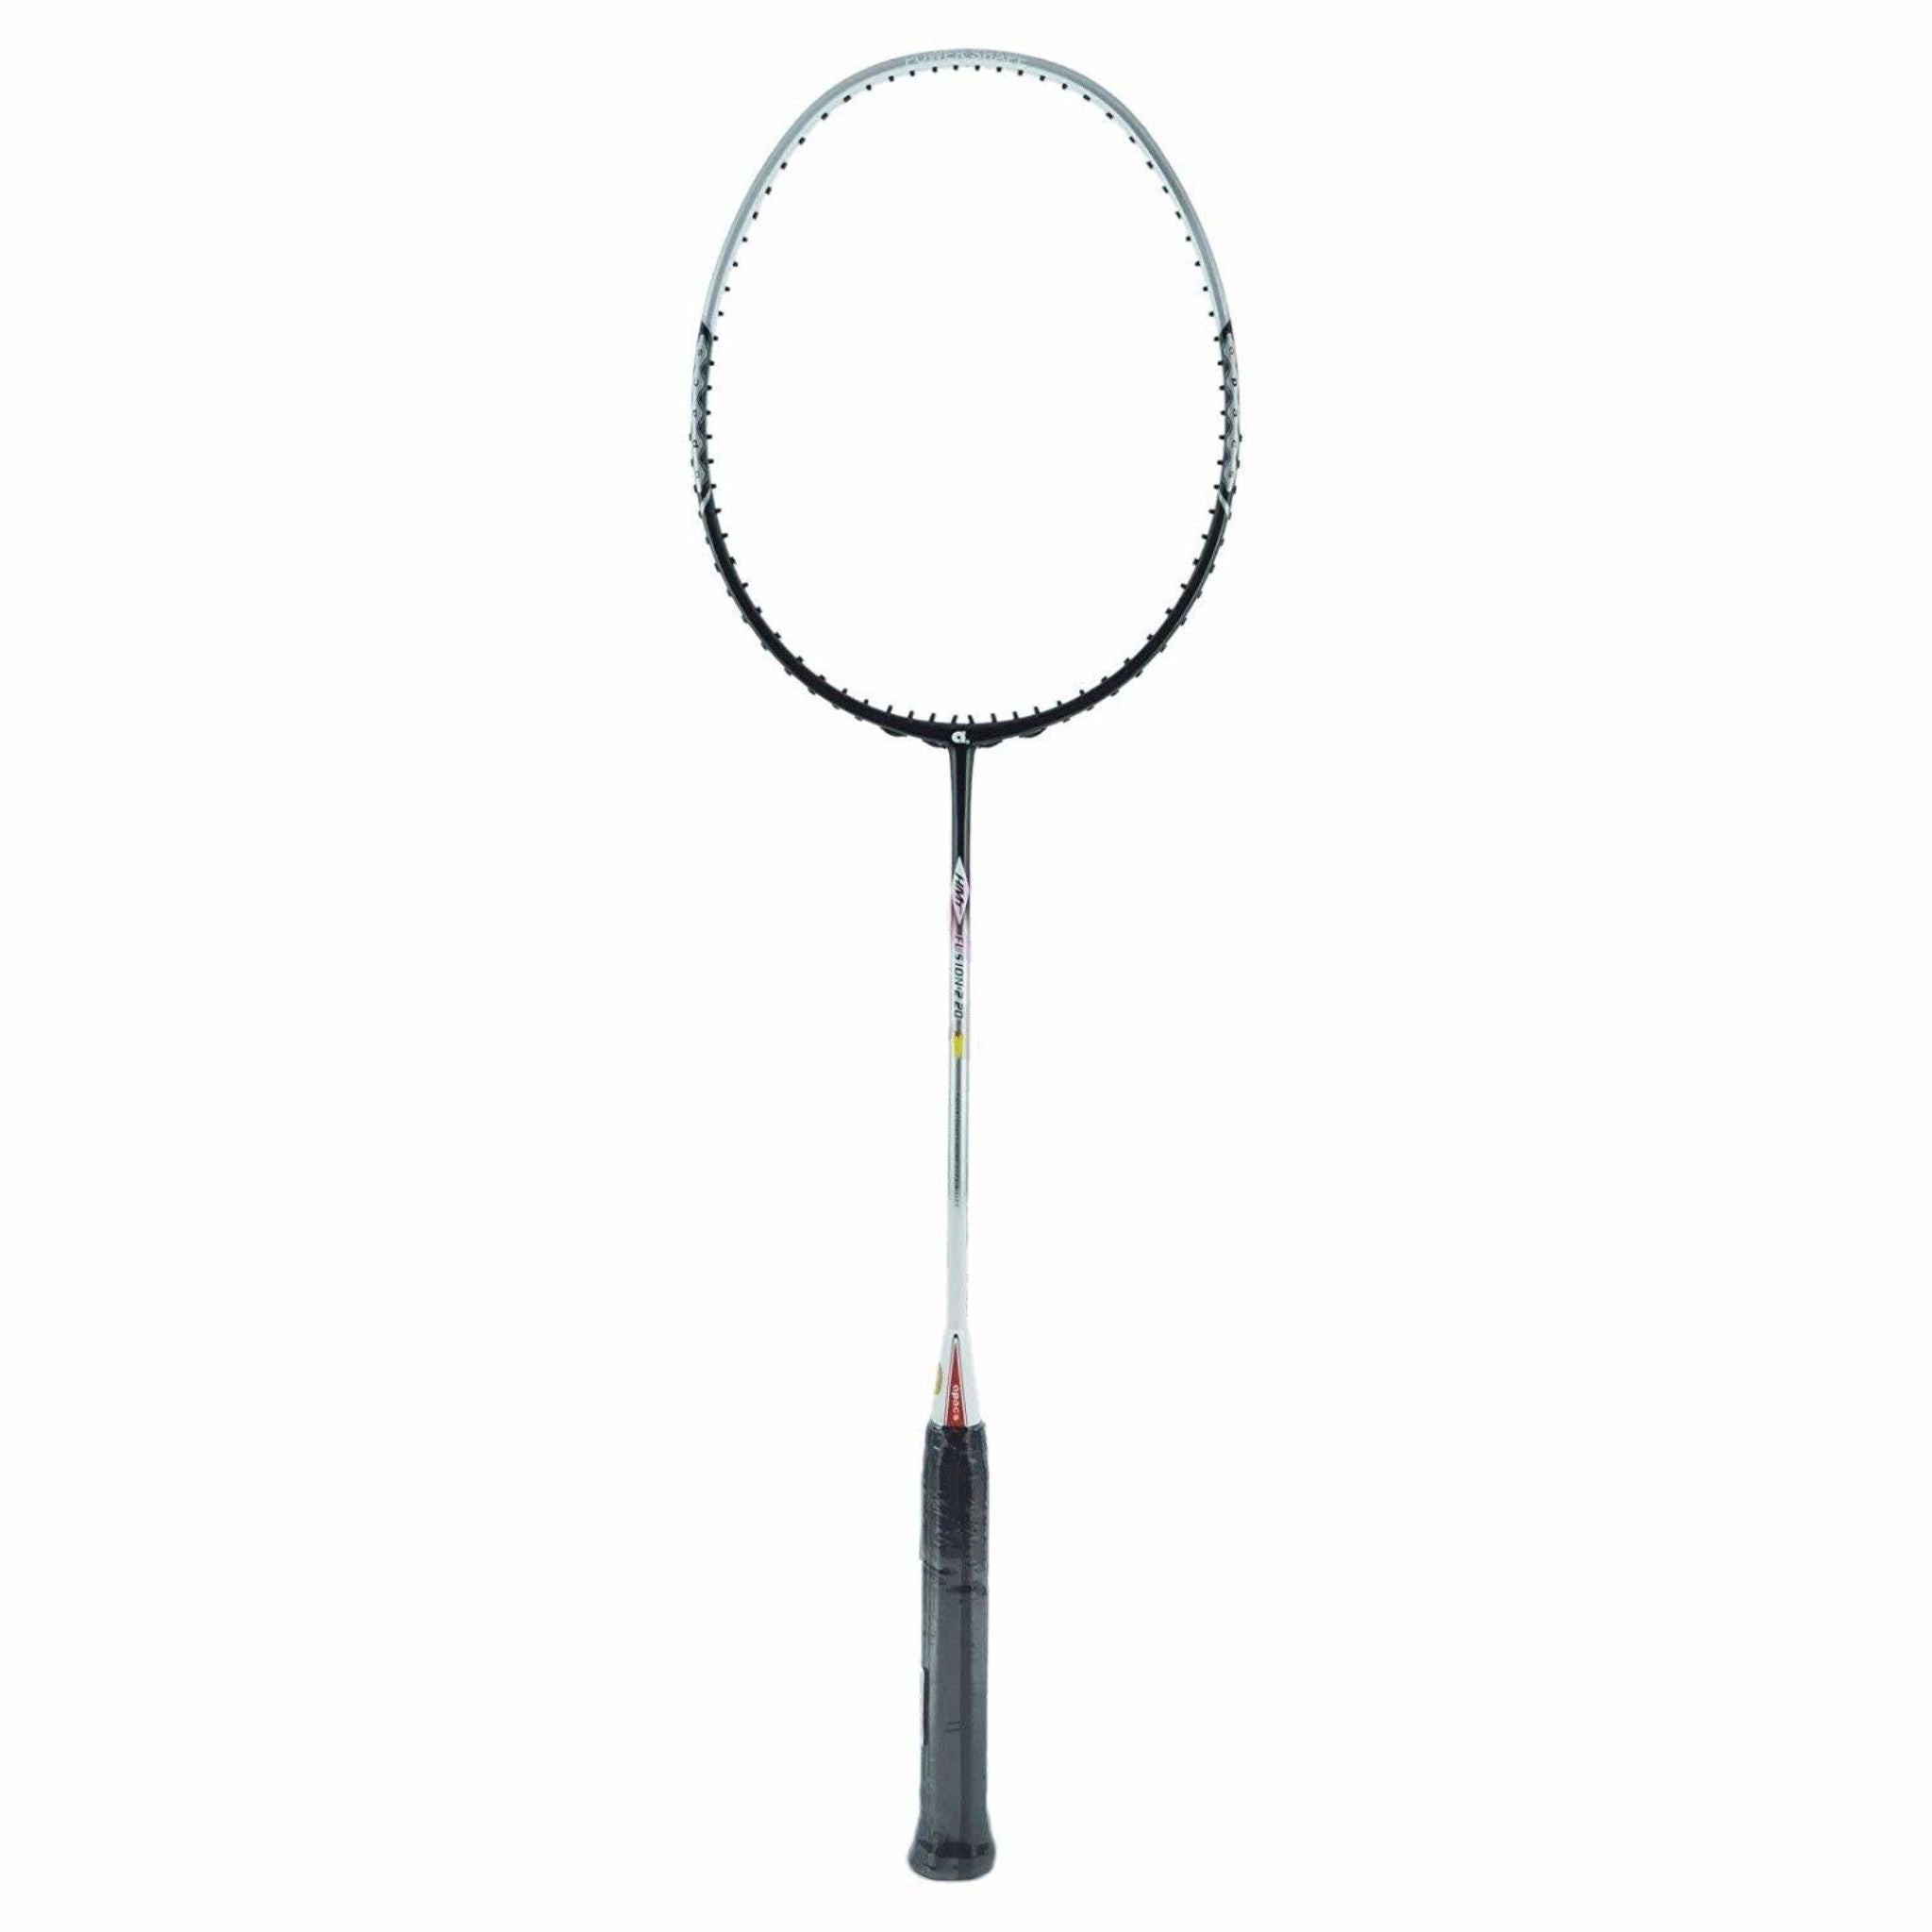 APACS Fusion 2.20 Badminton Racket